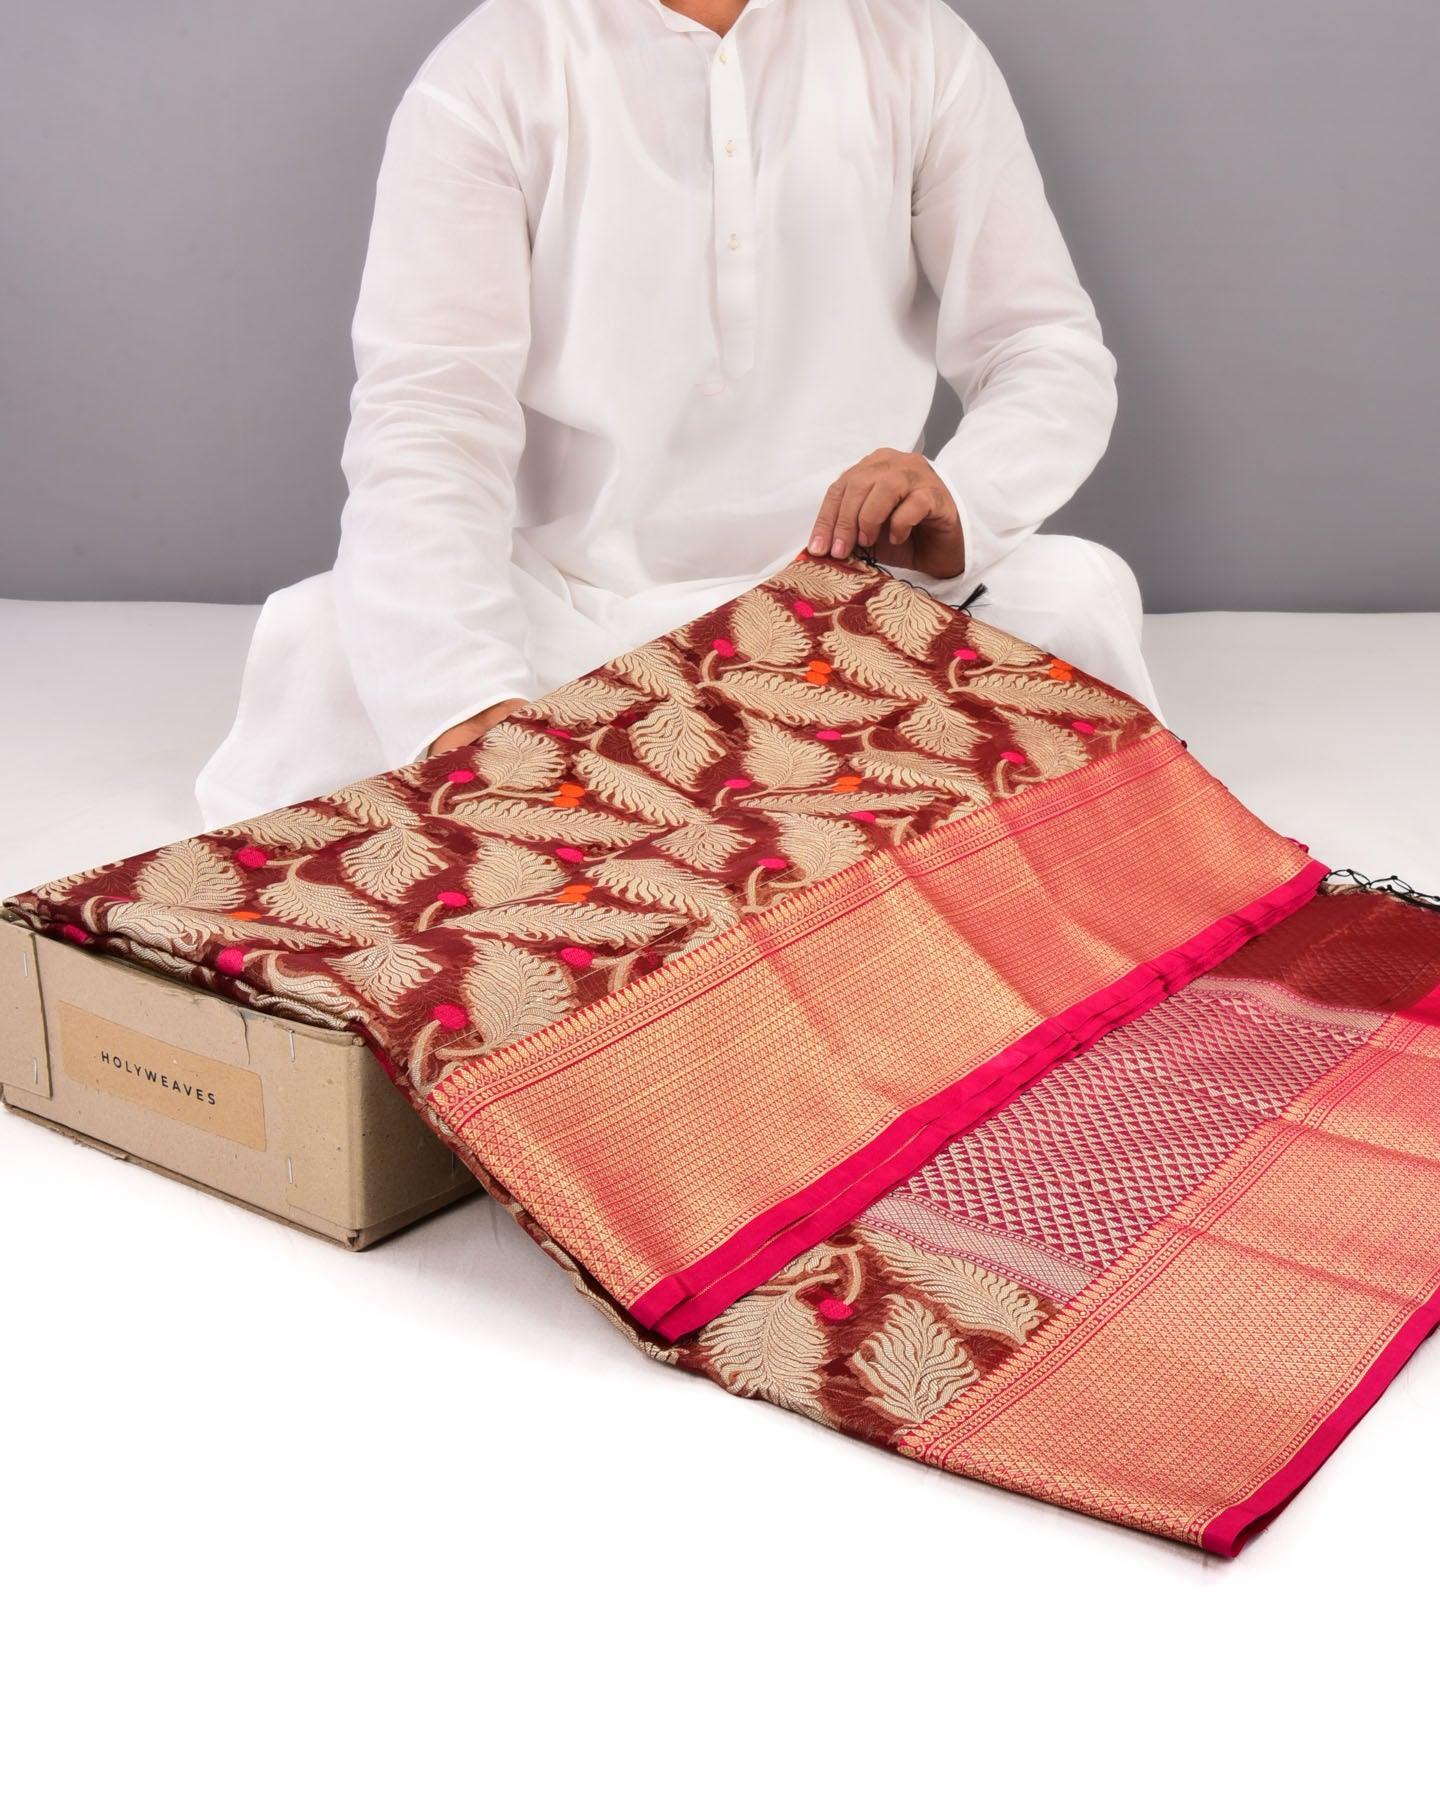 Maroon Banarasi Feather Cutwork Brocade Woven Art Cotton Silk Saree - By HolyWeaves, Benares